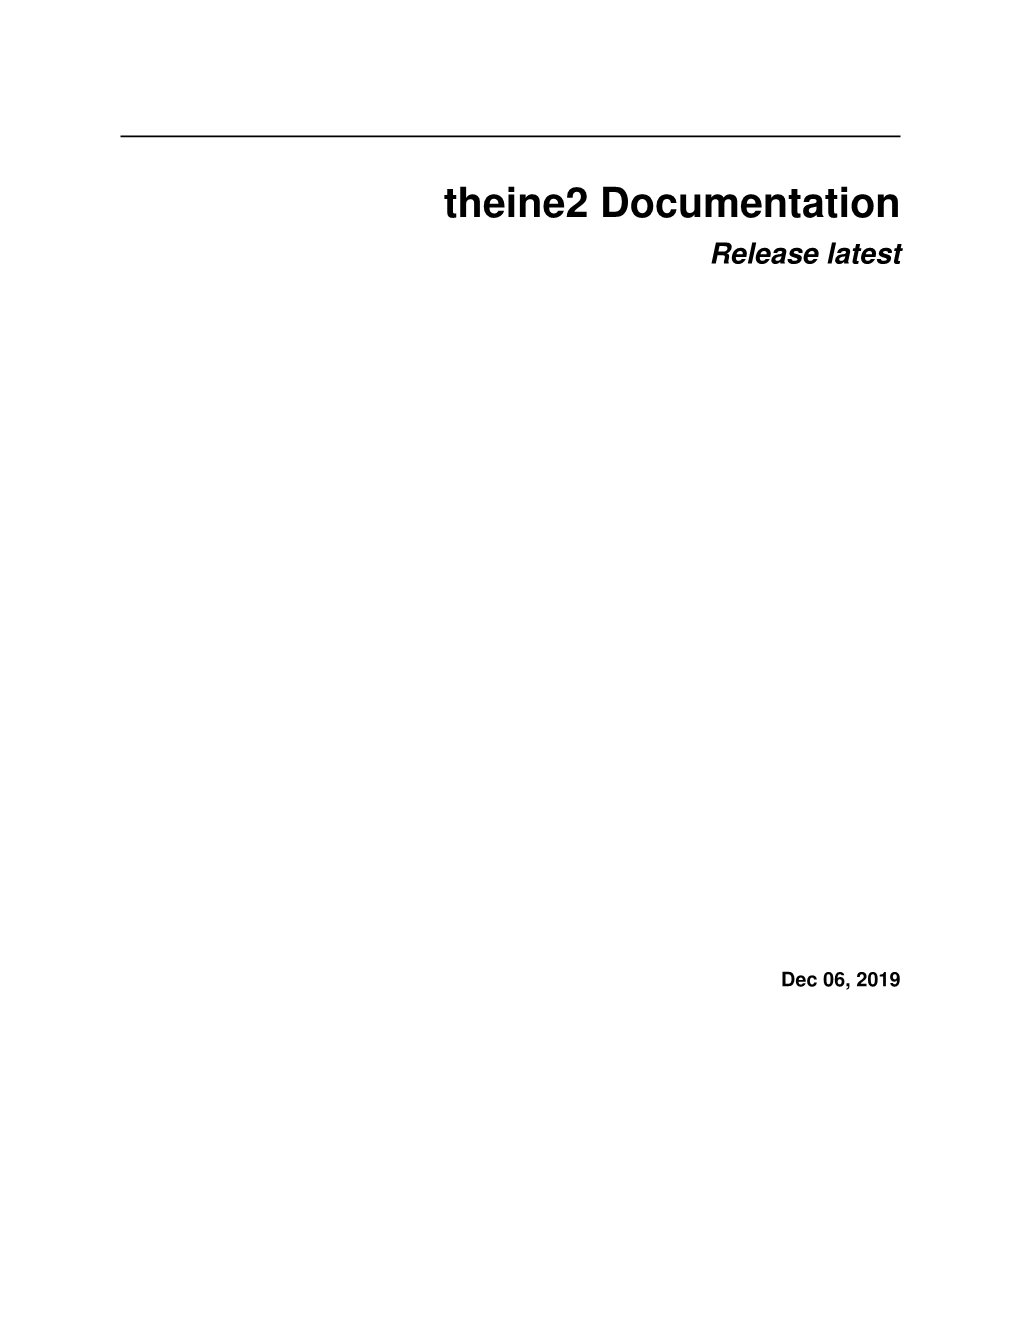 Theine2 Documentation Release Latest